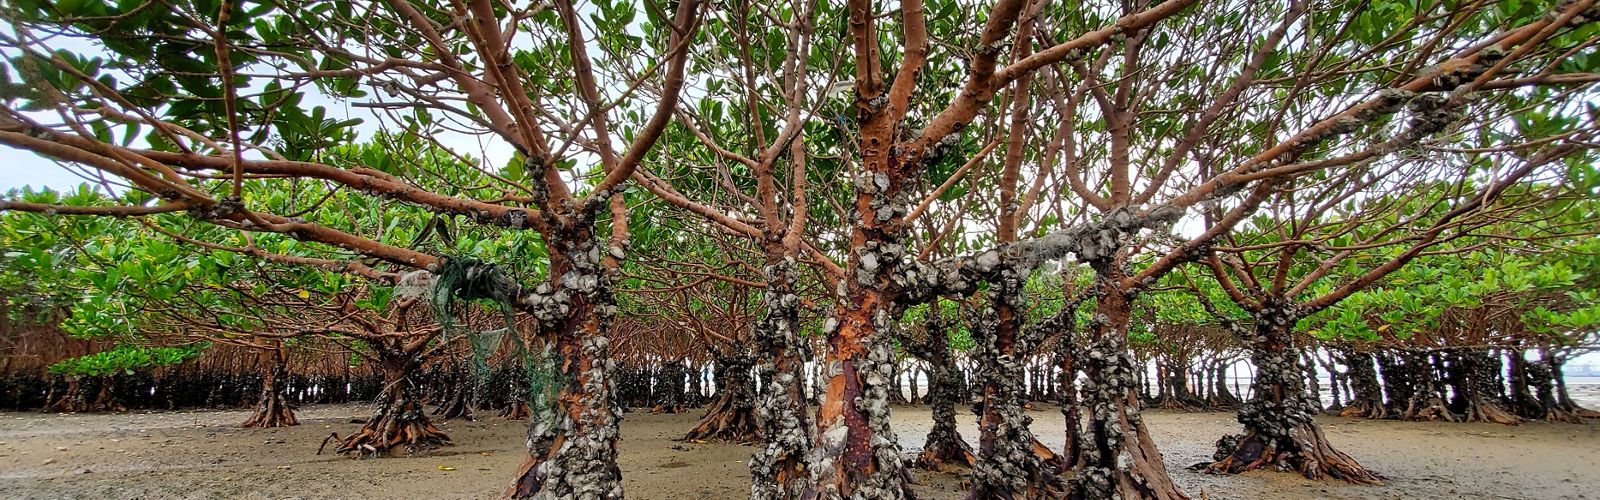 Exposed mangroves.